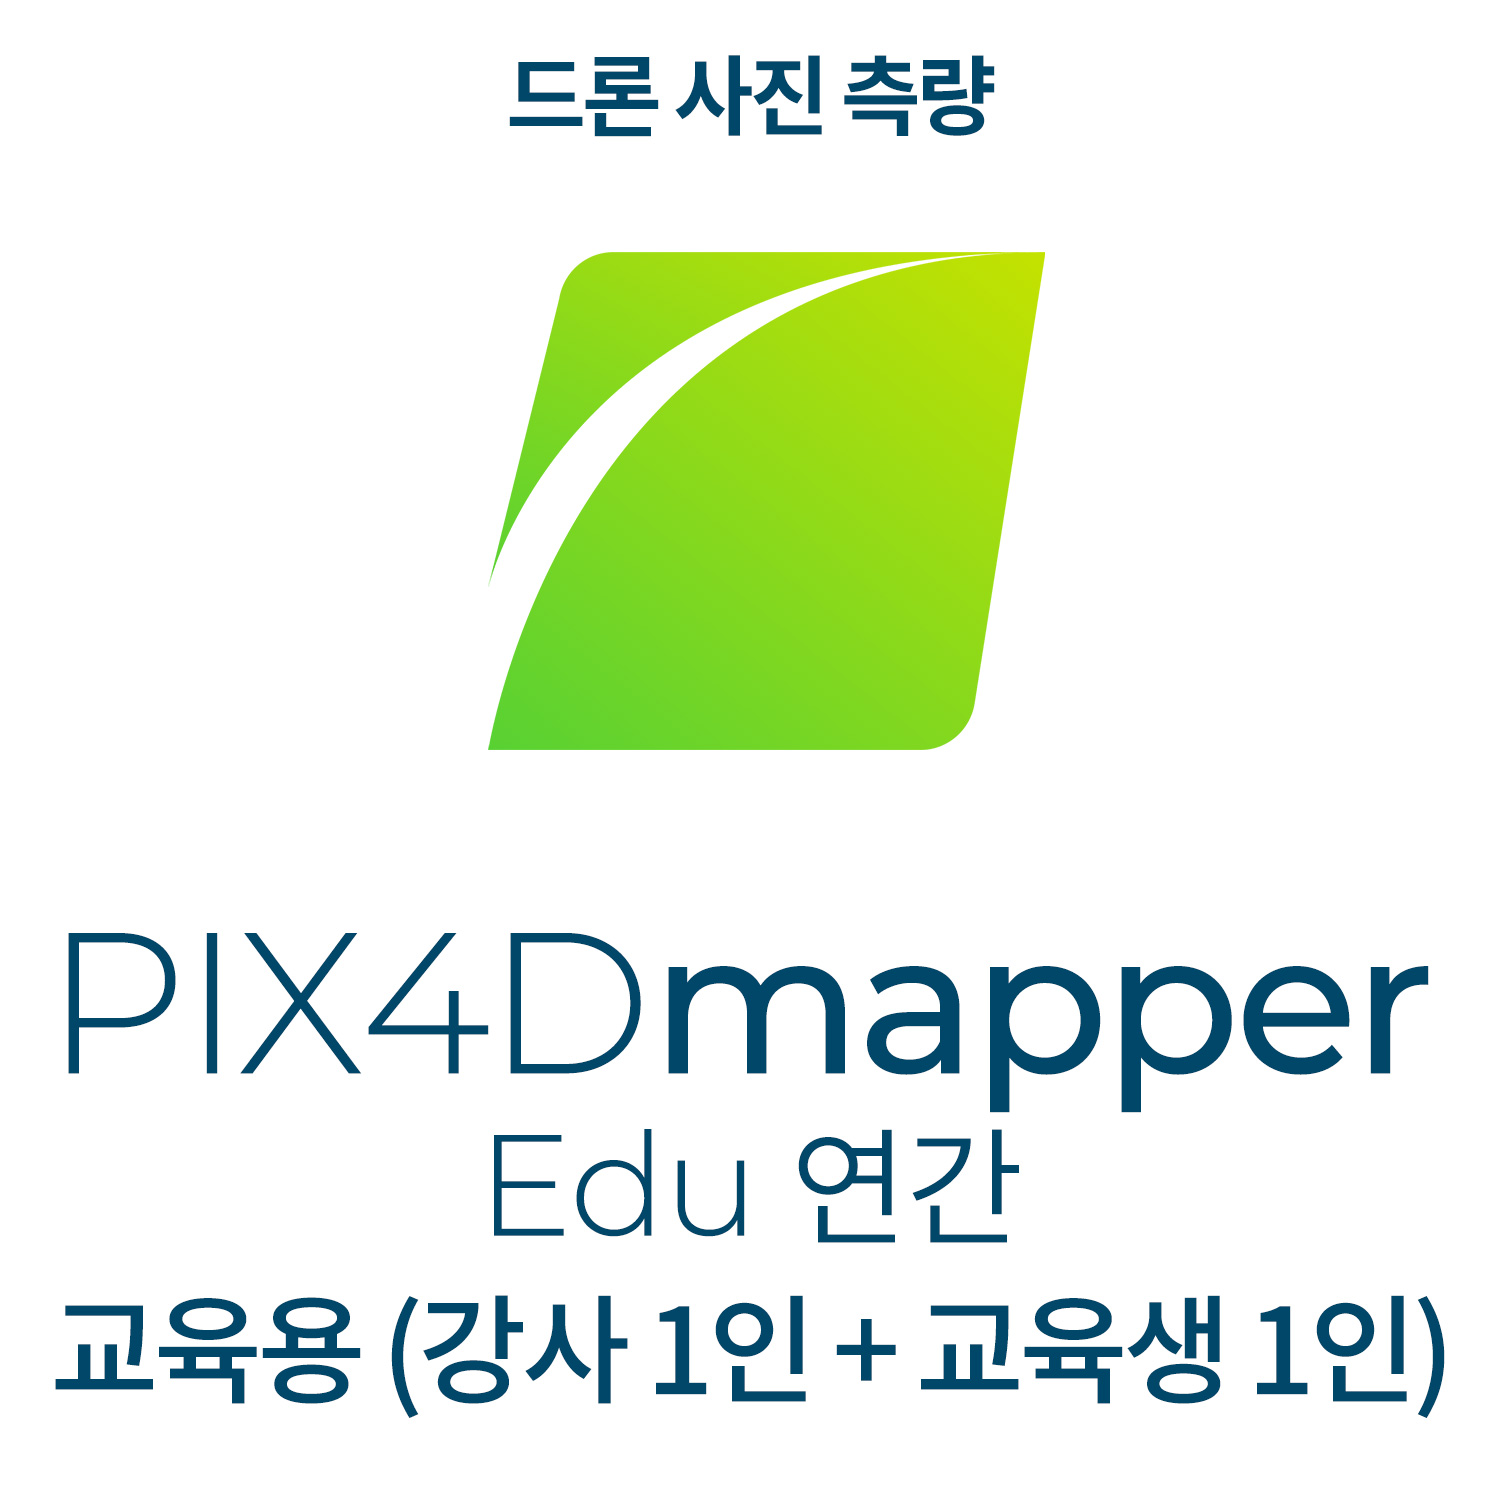 PIX4Dmapper EDU교육기관-학교(강사 1인 + 교육생 1인)(연간이용) 헬셀